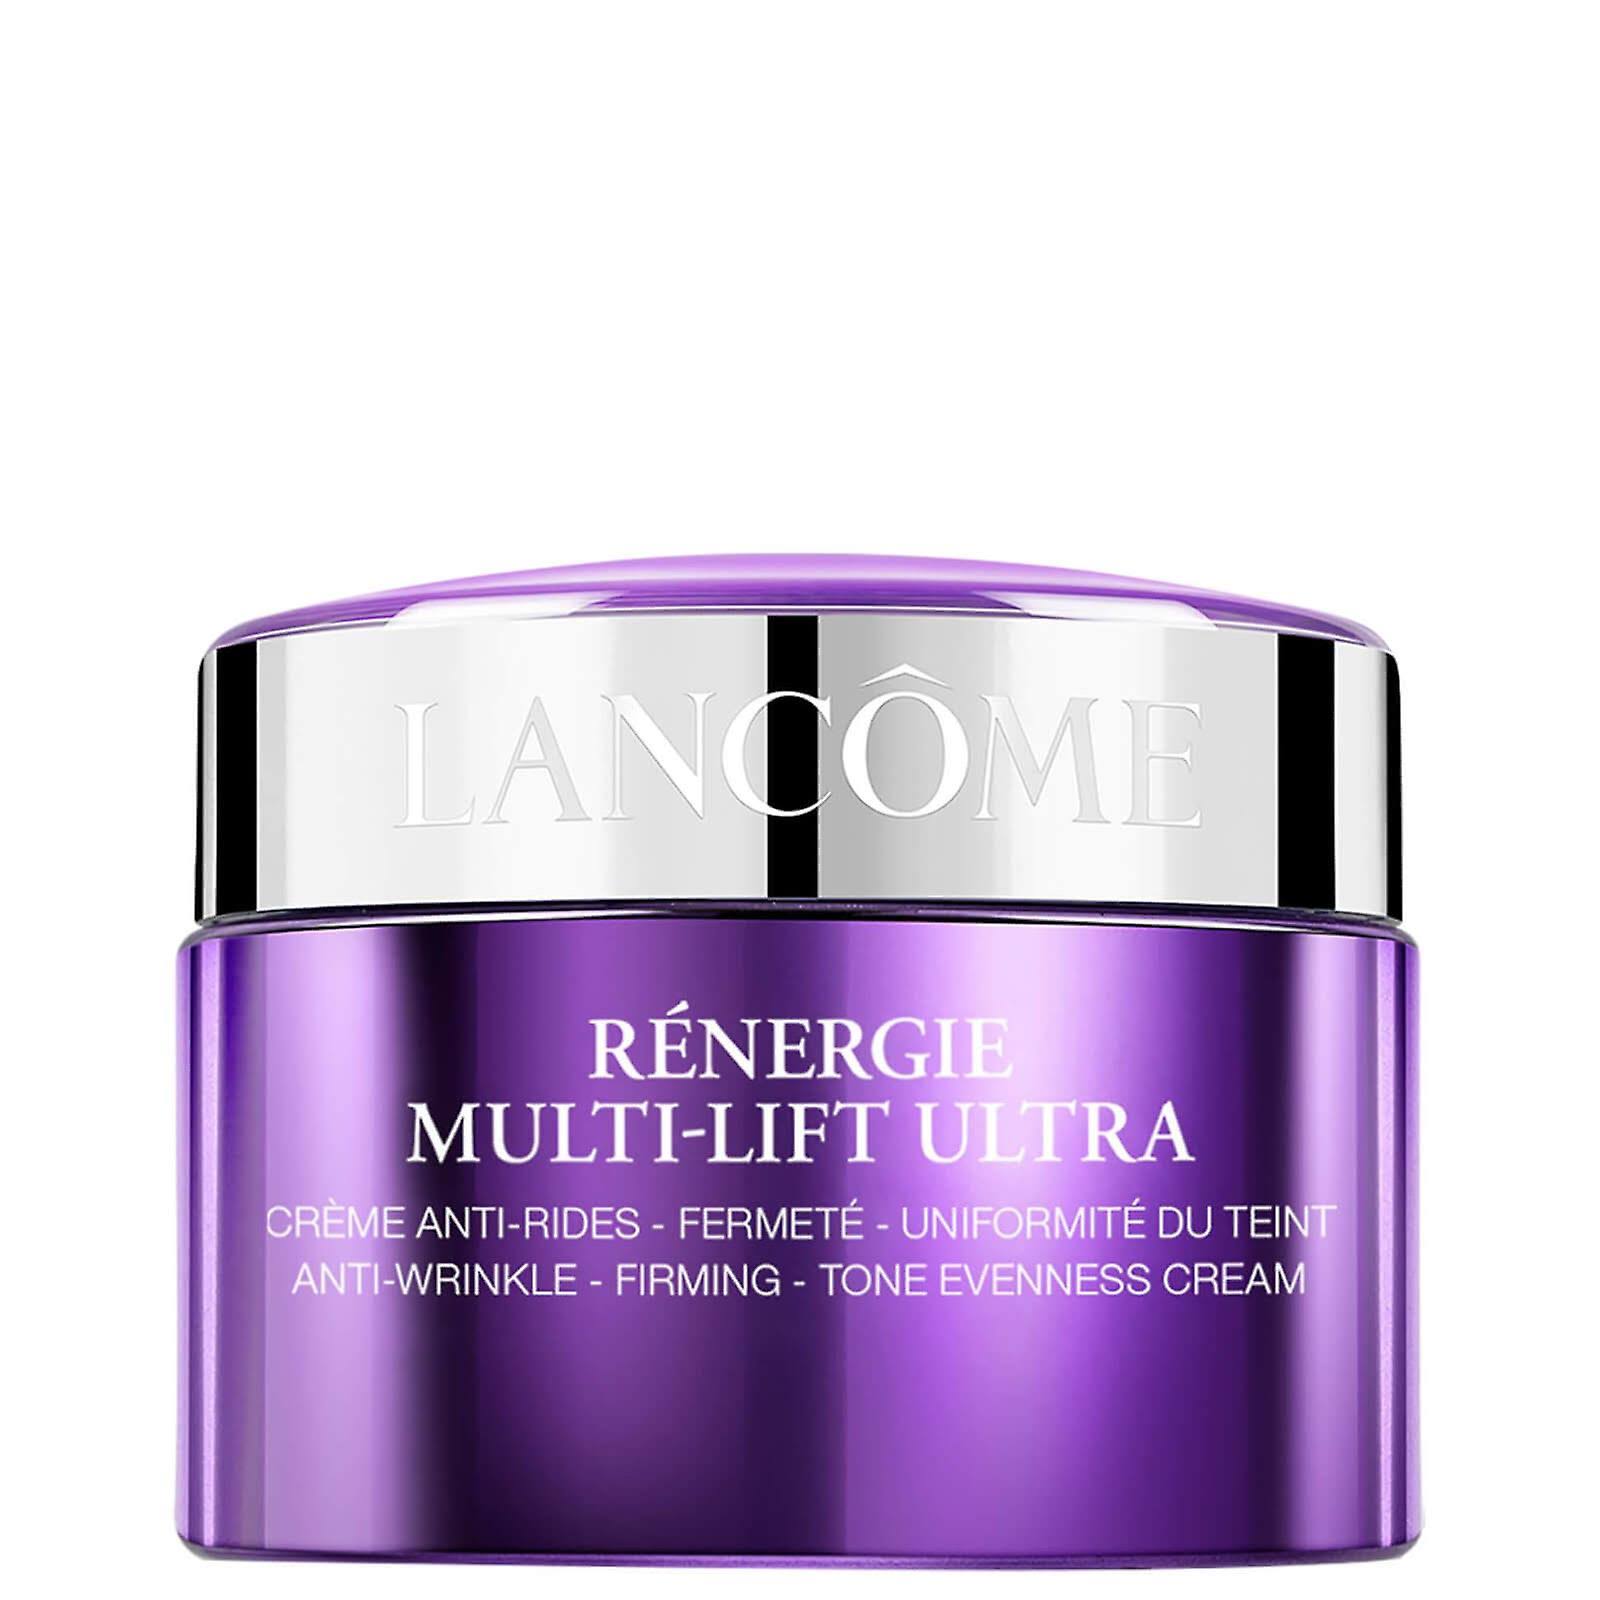 Lancome Renergie Multi-Lift Ultra Anti-Winkle, Firming, Dark Spot Correcting Cream 50ml